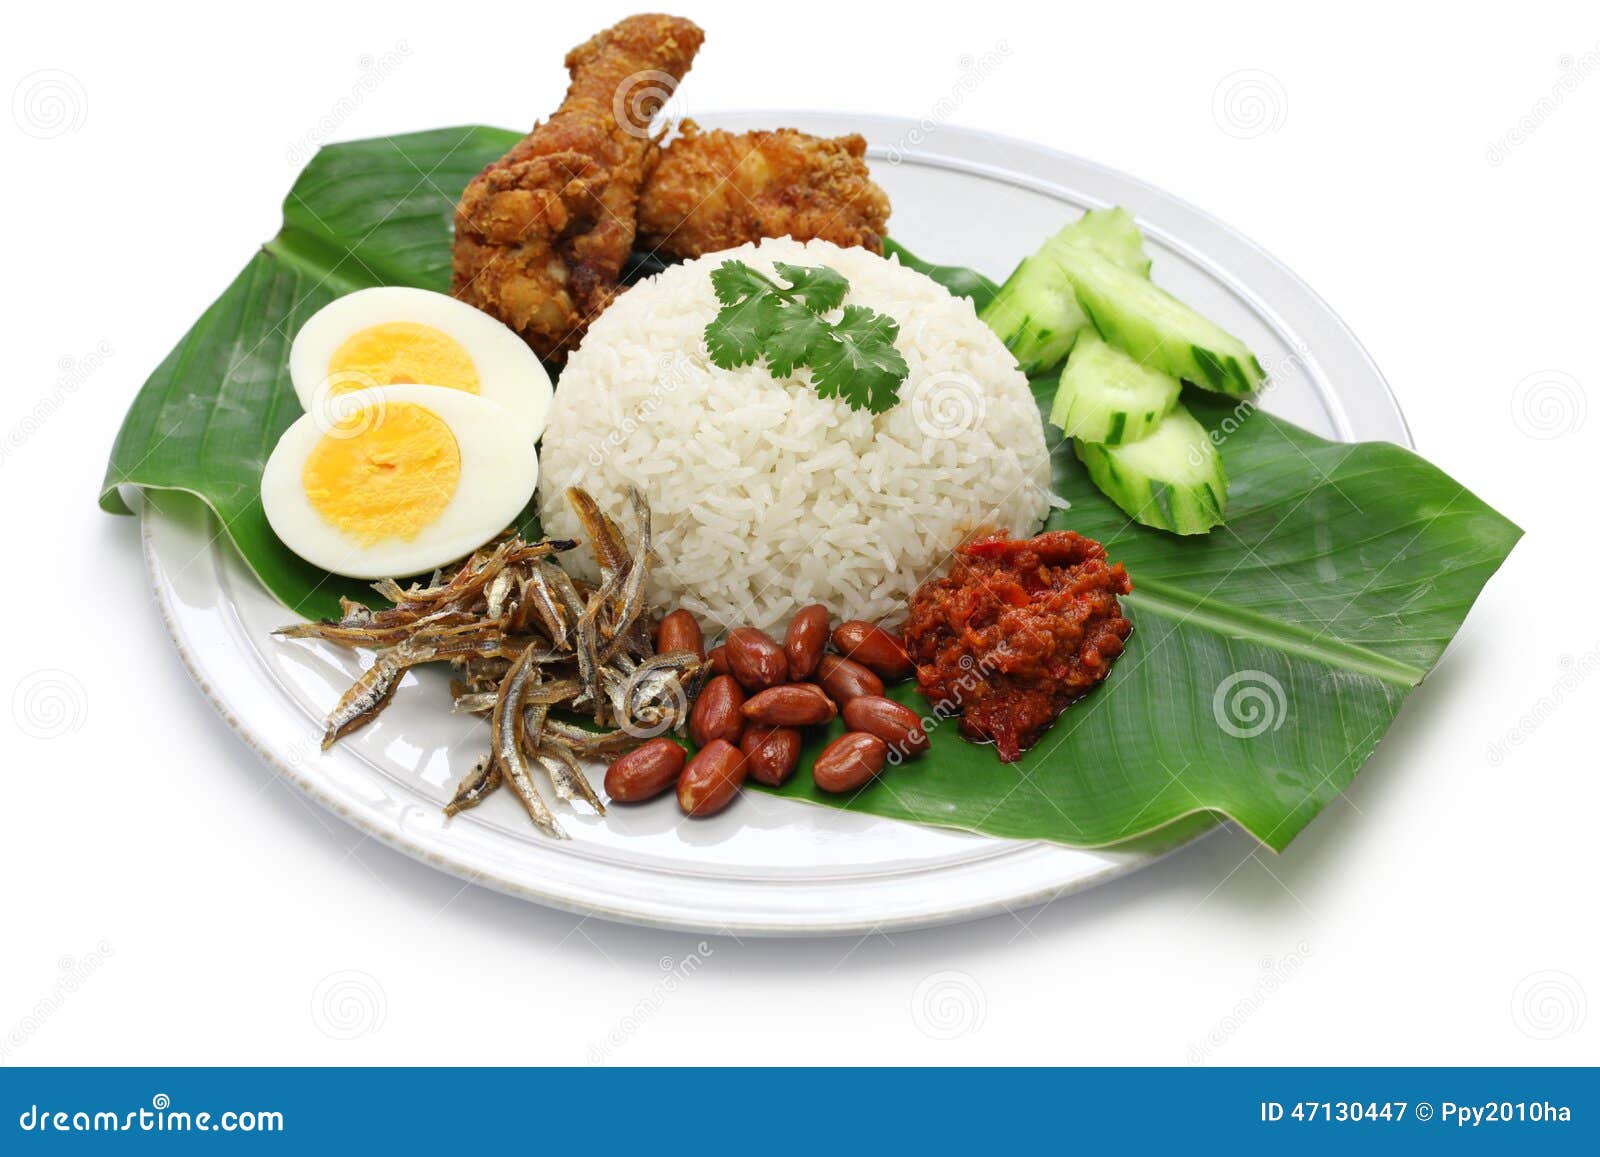 nasi lemak, coconut milk rice, malaysian cuisine